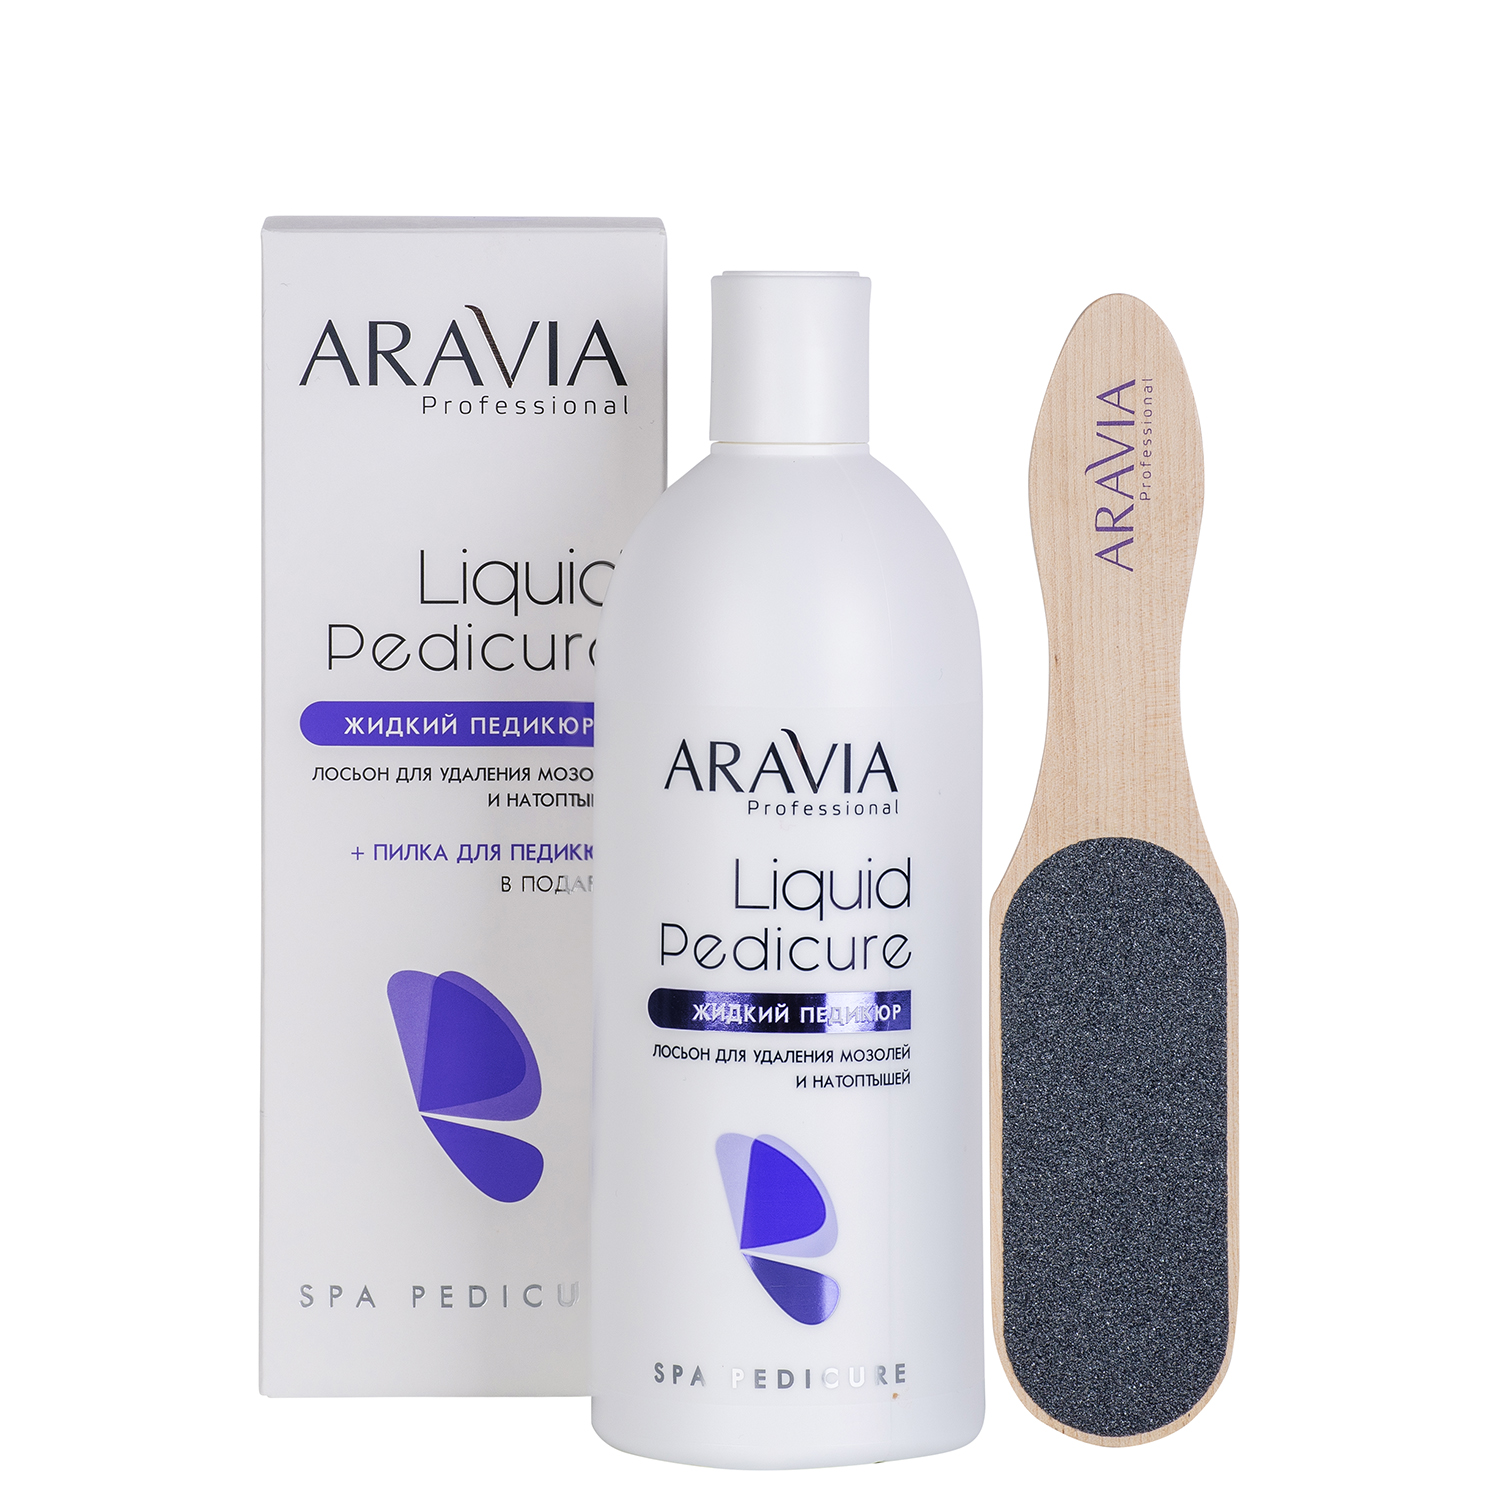 Aravia Professional Aravia Professional Лосьон для удаления мозолей и натоптышей Жидкий педикюр 500 мл (Aravia Professional, SPA педикюр)